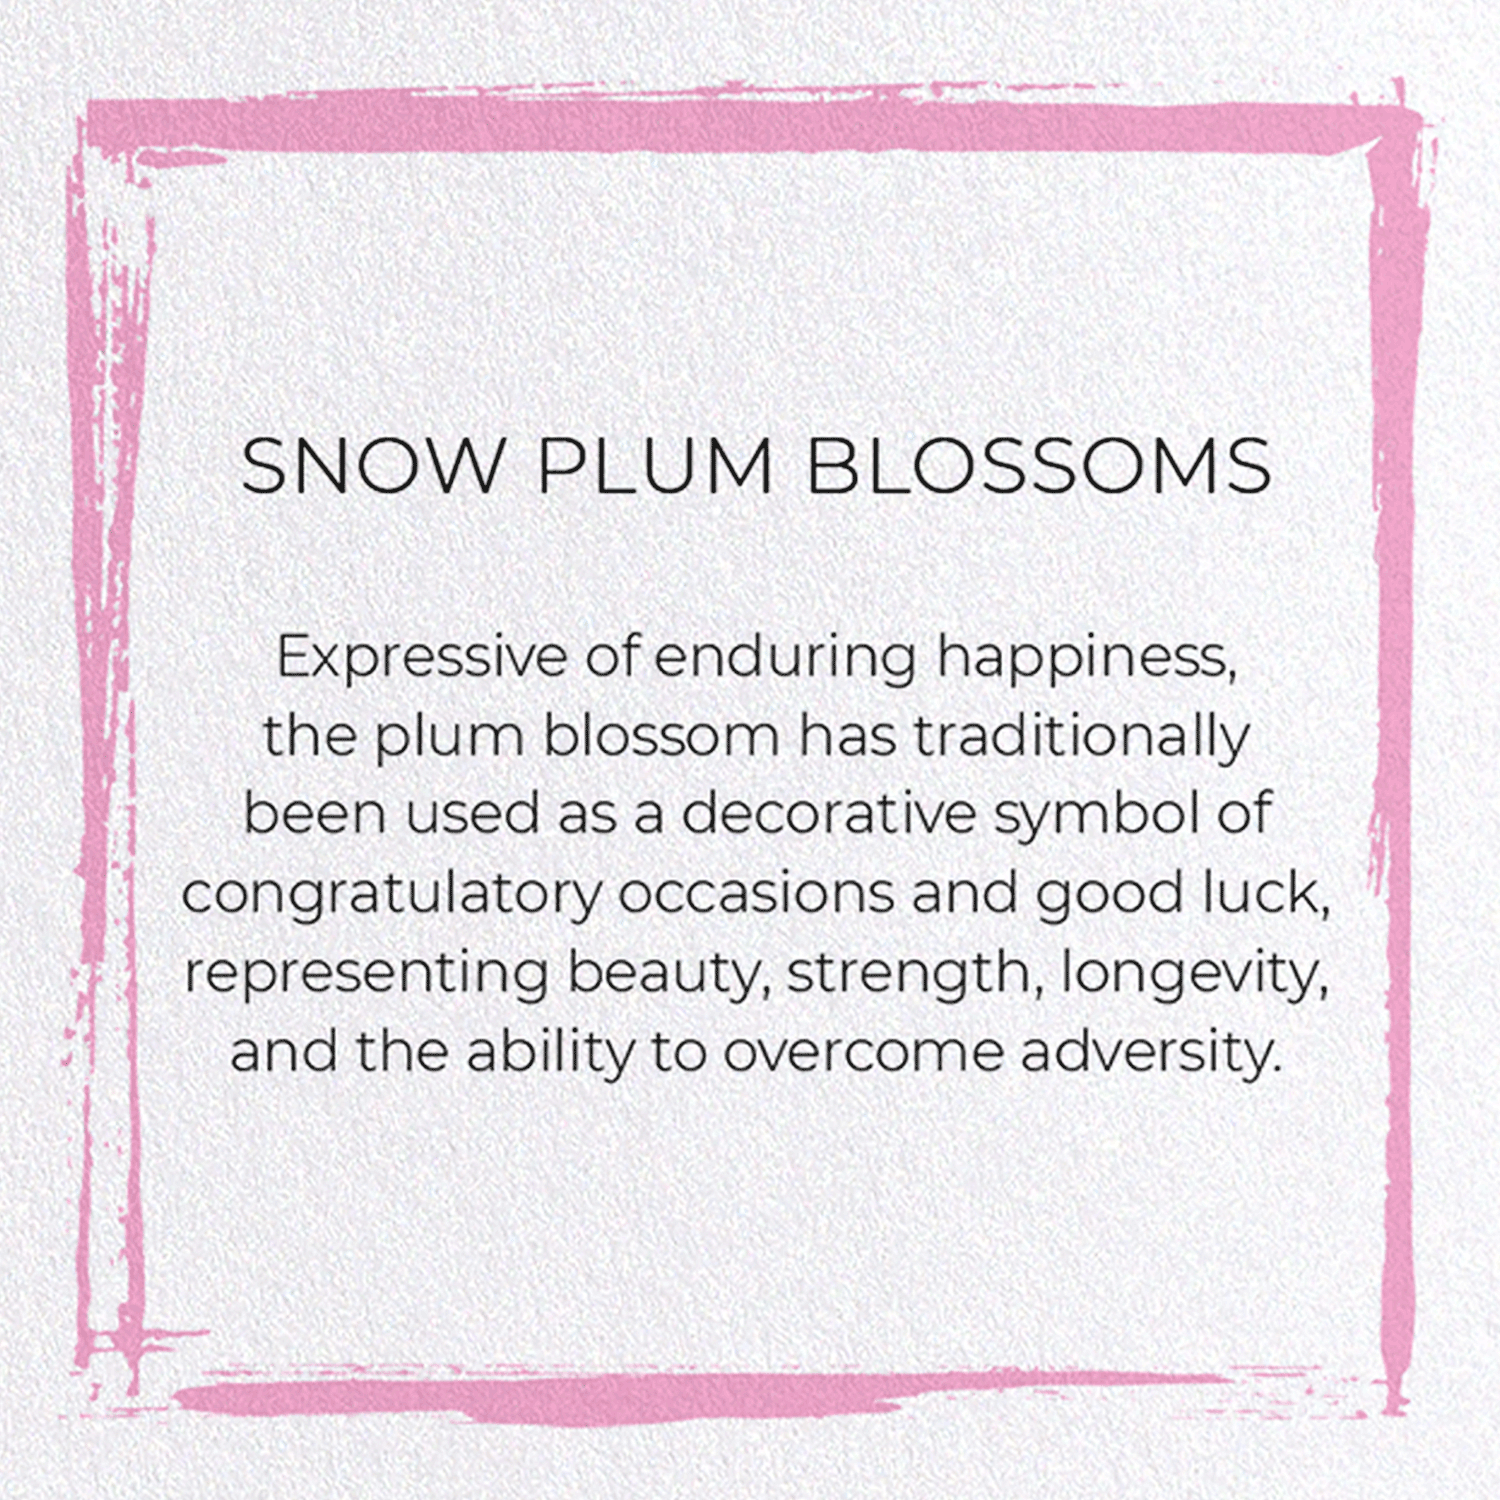 SNOW PLUM BLOSSOMS